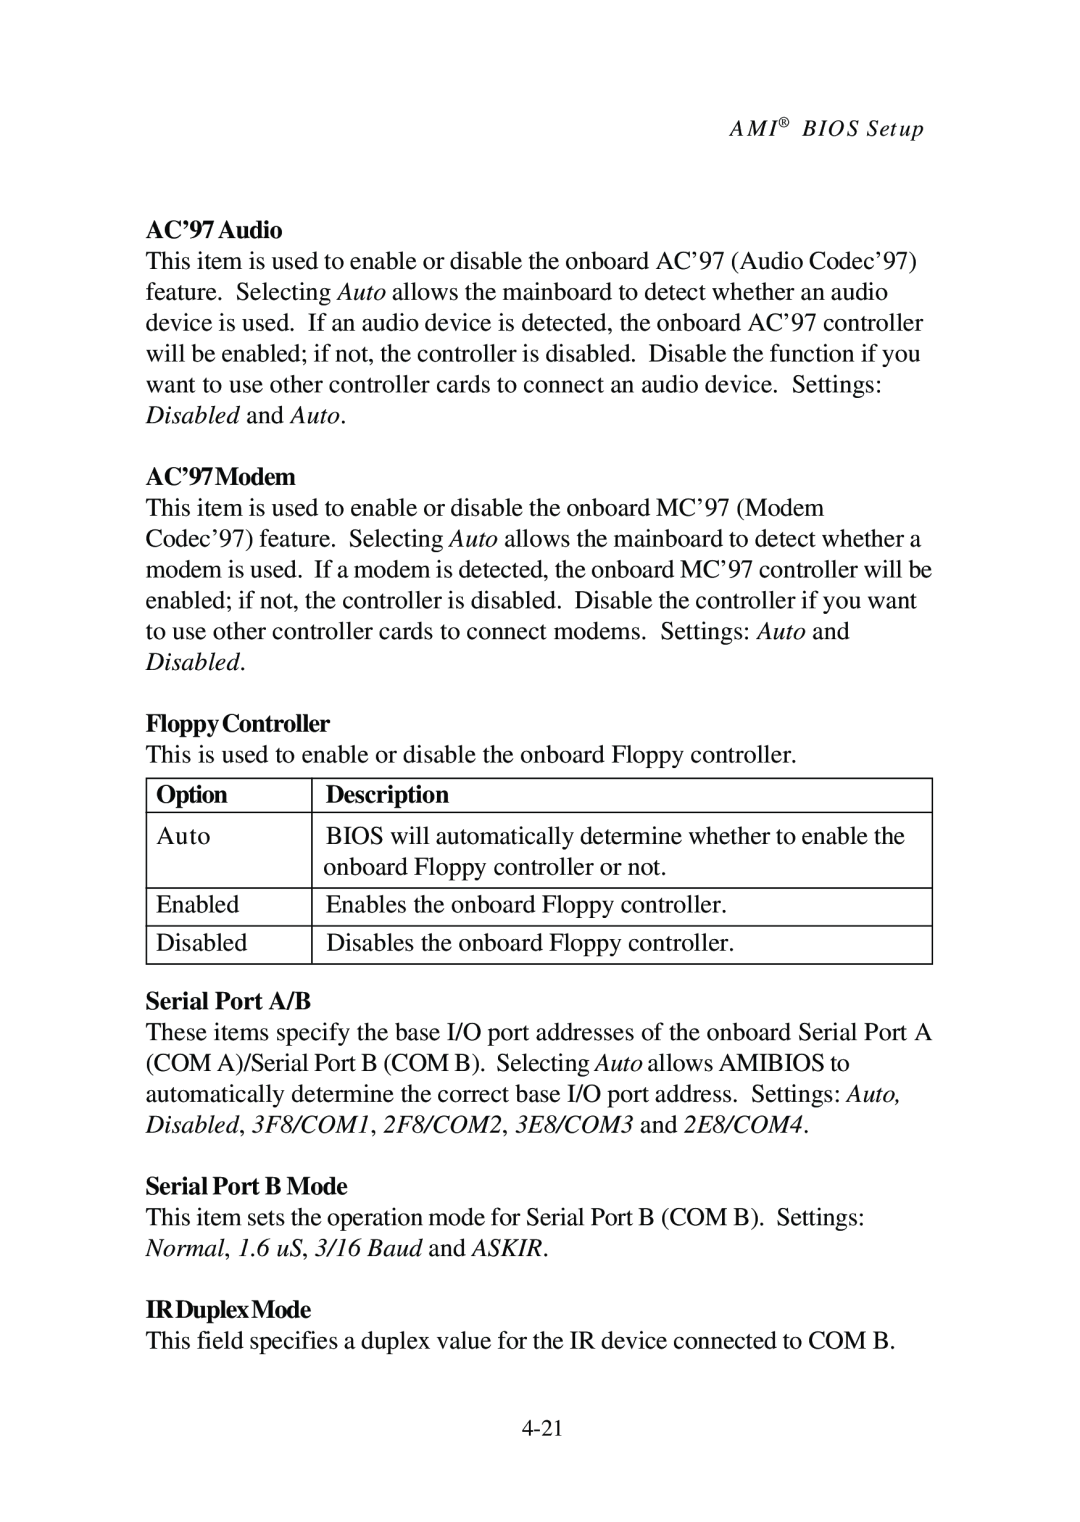 Premio Computer Aries/Centella manual AC’97 Audio, AC’97Modem, FloppyController, Option, Description, Serial Port A/B 